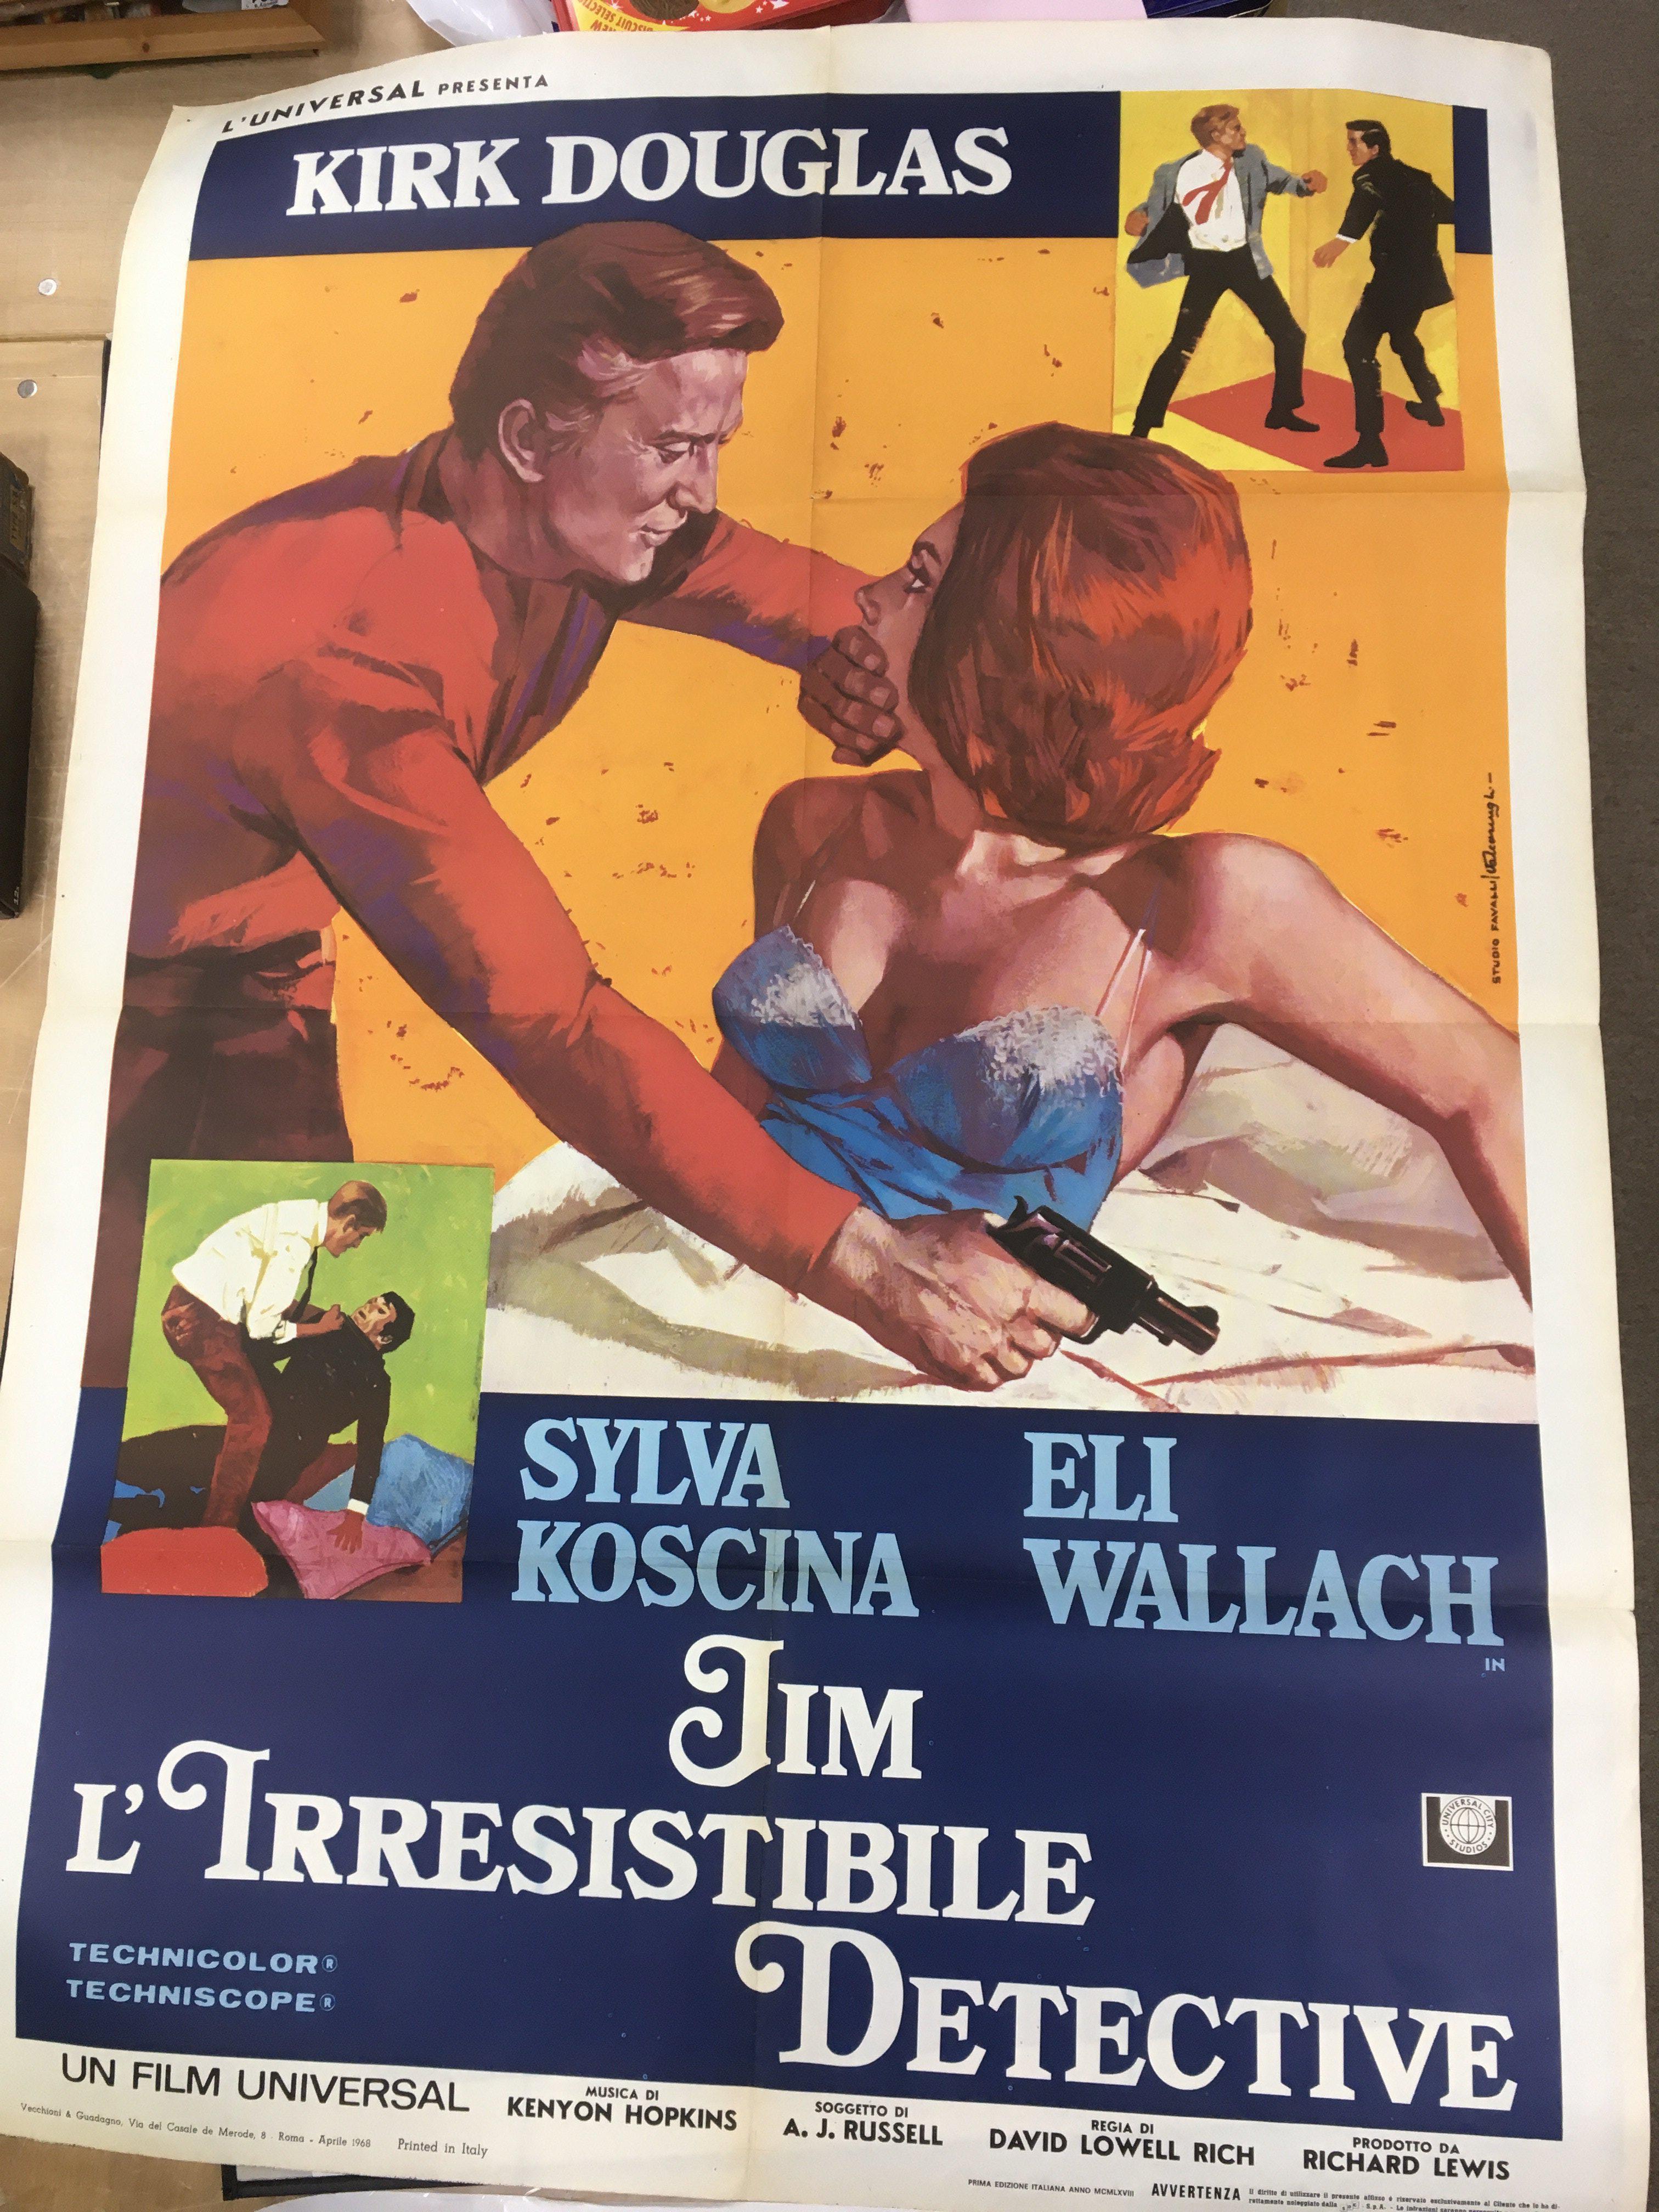 A rare Italian bus stop film poster for 'Jim l'irr